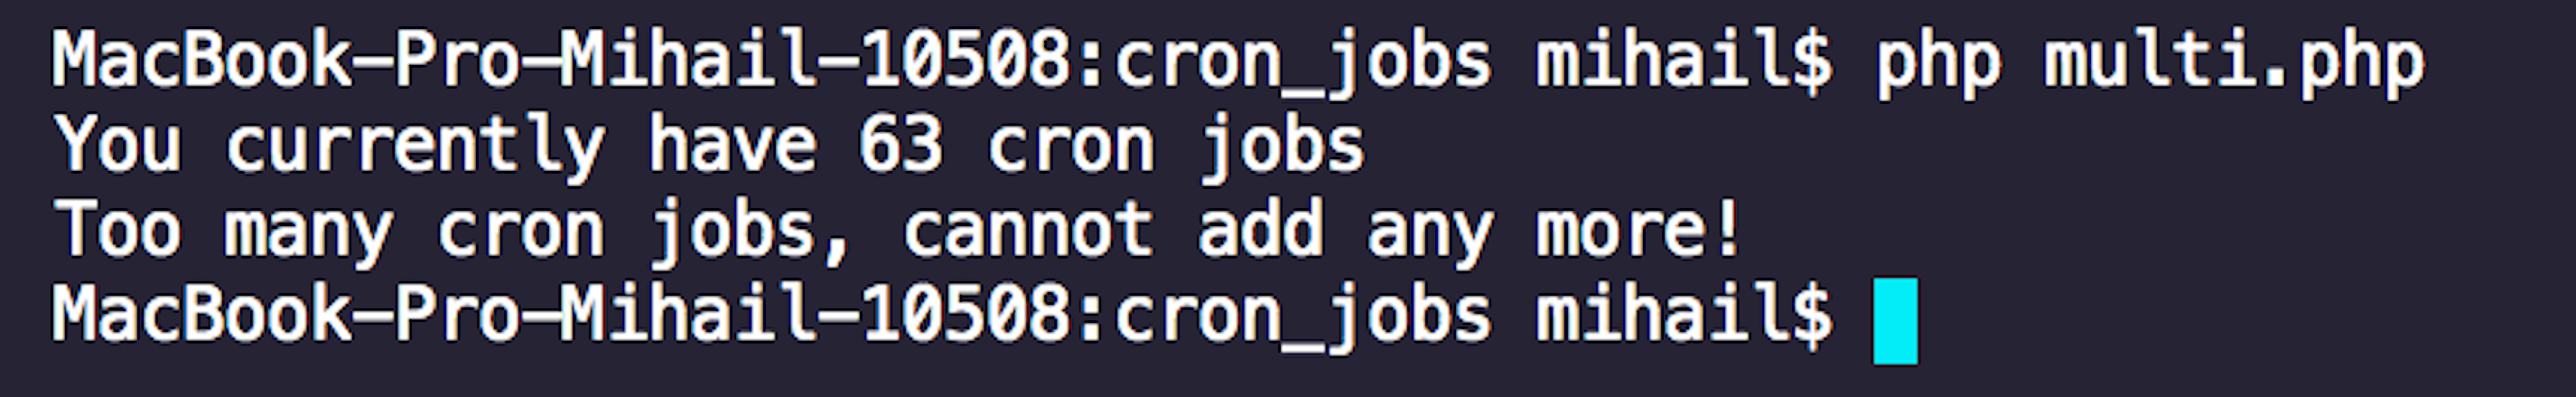 Terminating Script when reaching the Cron Jobs Count Limit